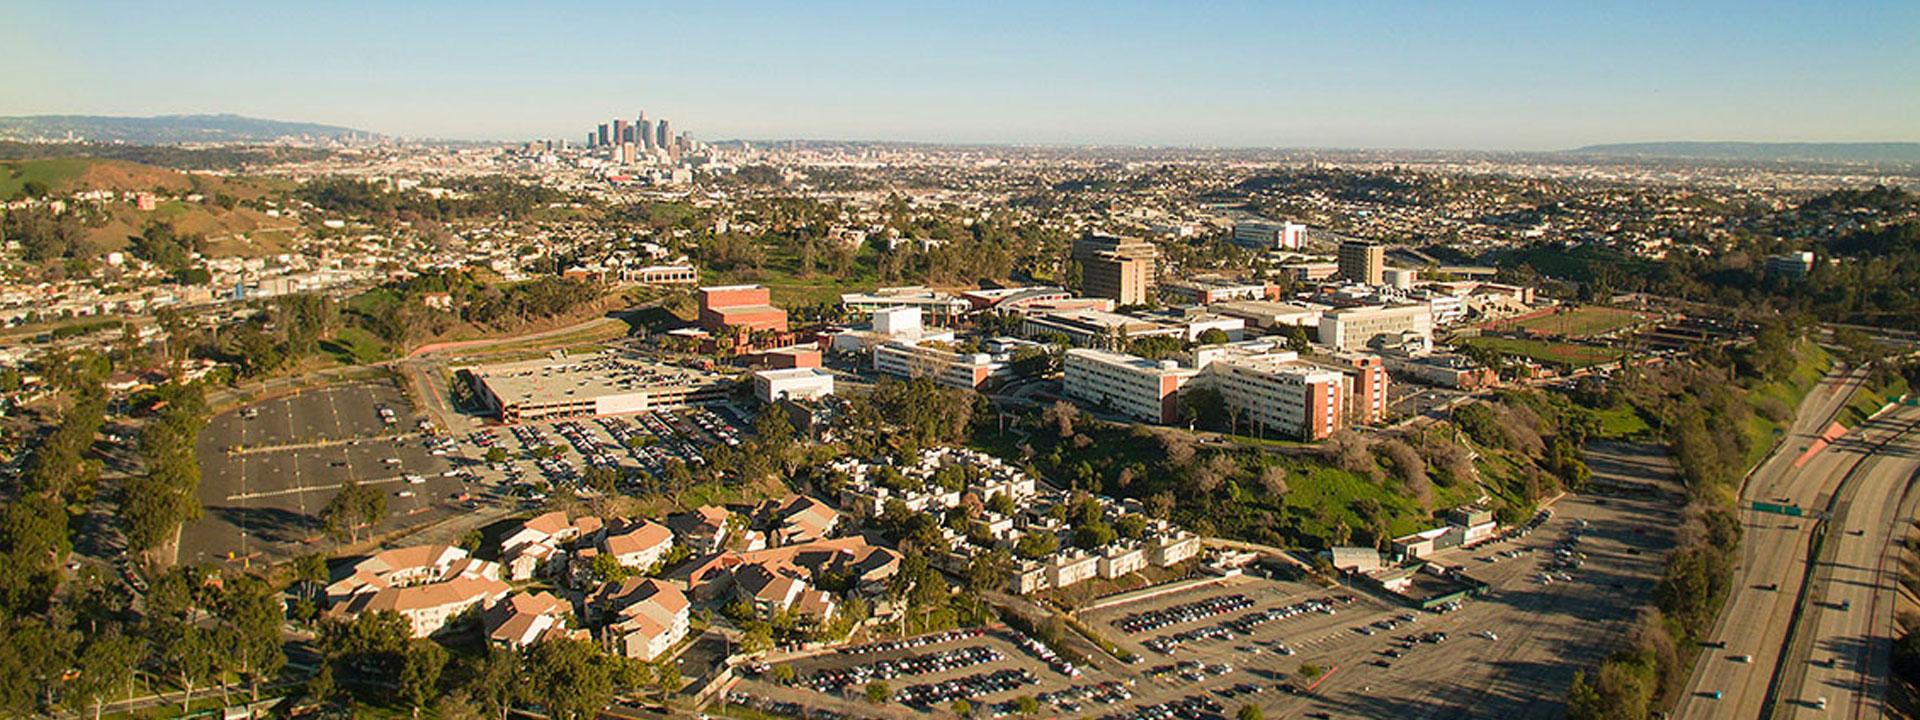 Aerial view of Cal State LA